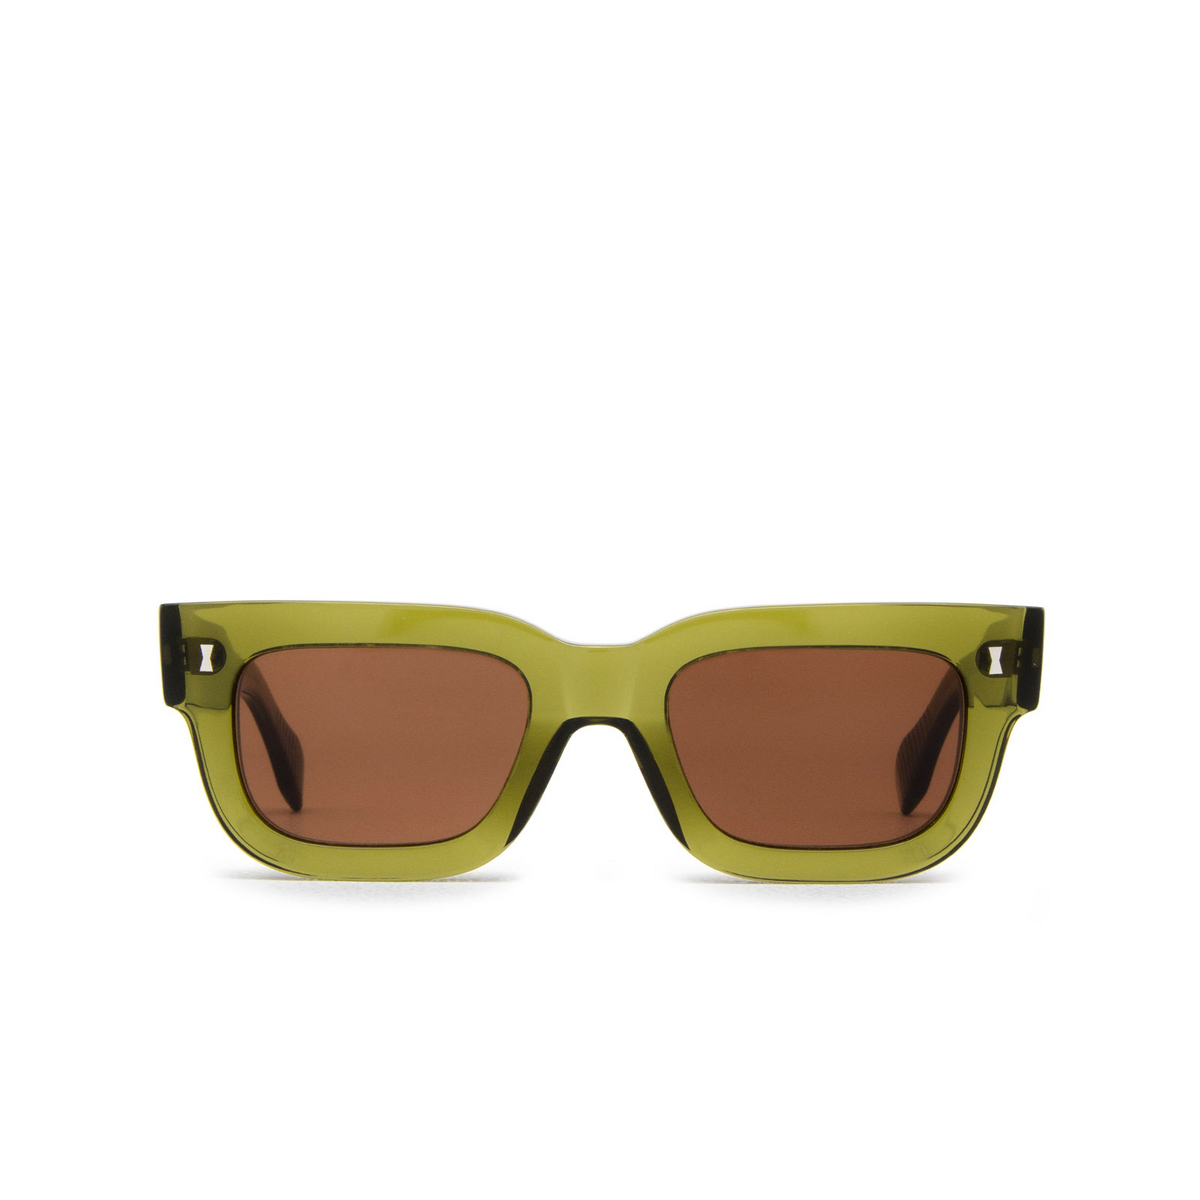 Cubitts MILNER Sunglasses MIL-R-KHA Khaki - front view